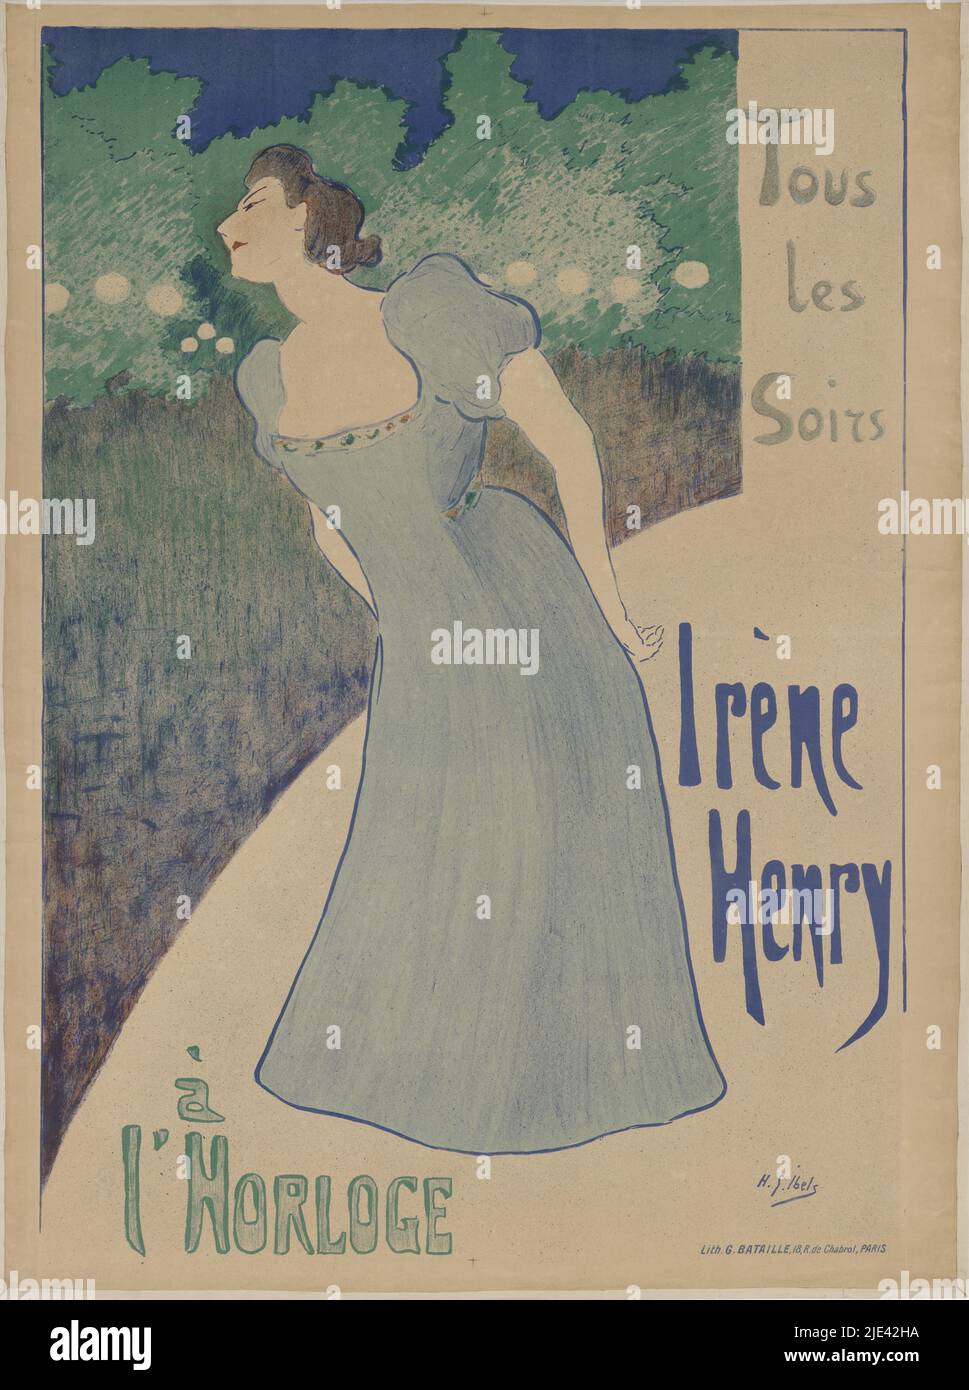 Advertising bill: Irène Henry à l'Horloge, Henri Gabriel Ibels, 1877 - 1912, print maker: Henri Gabriel Ibels, printer: G. Bataille, 1877 - 1936, paper, w 950 mm × h 1280 mm Stock Photo